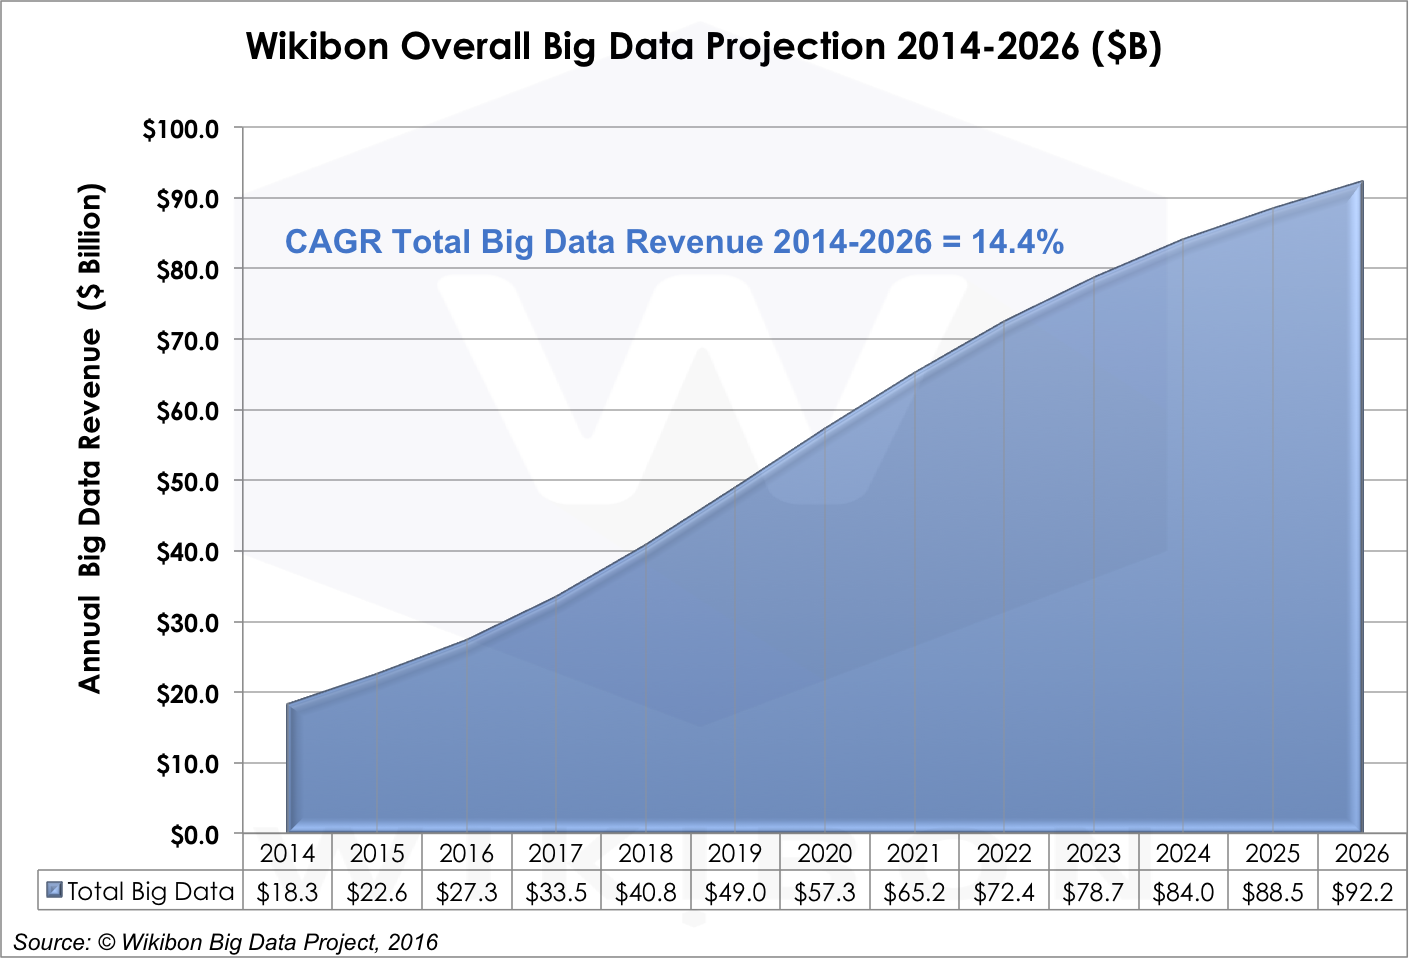 Figure 1: © Wikibon Worldwide Big Data Market Projection 2014-2026 ($B) Source: Wikibon Big Data Project, 2016